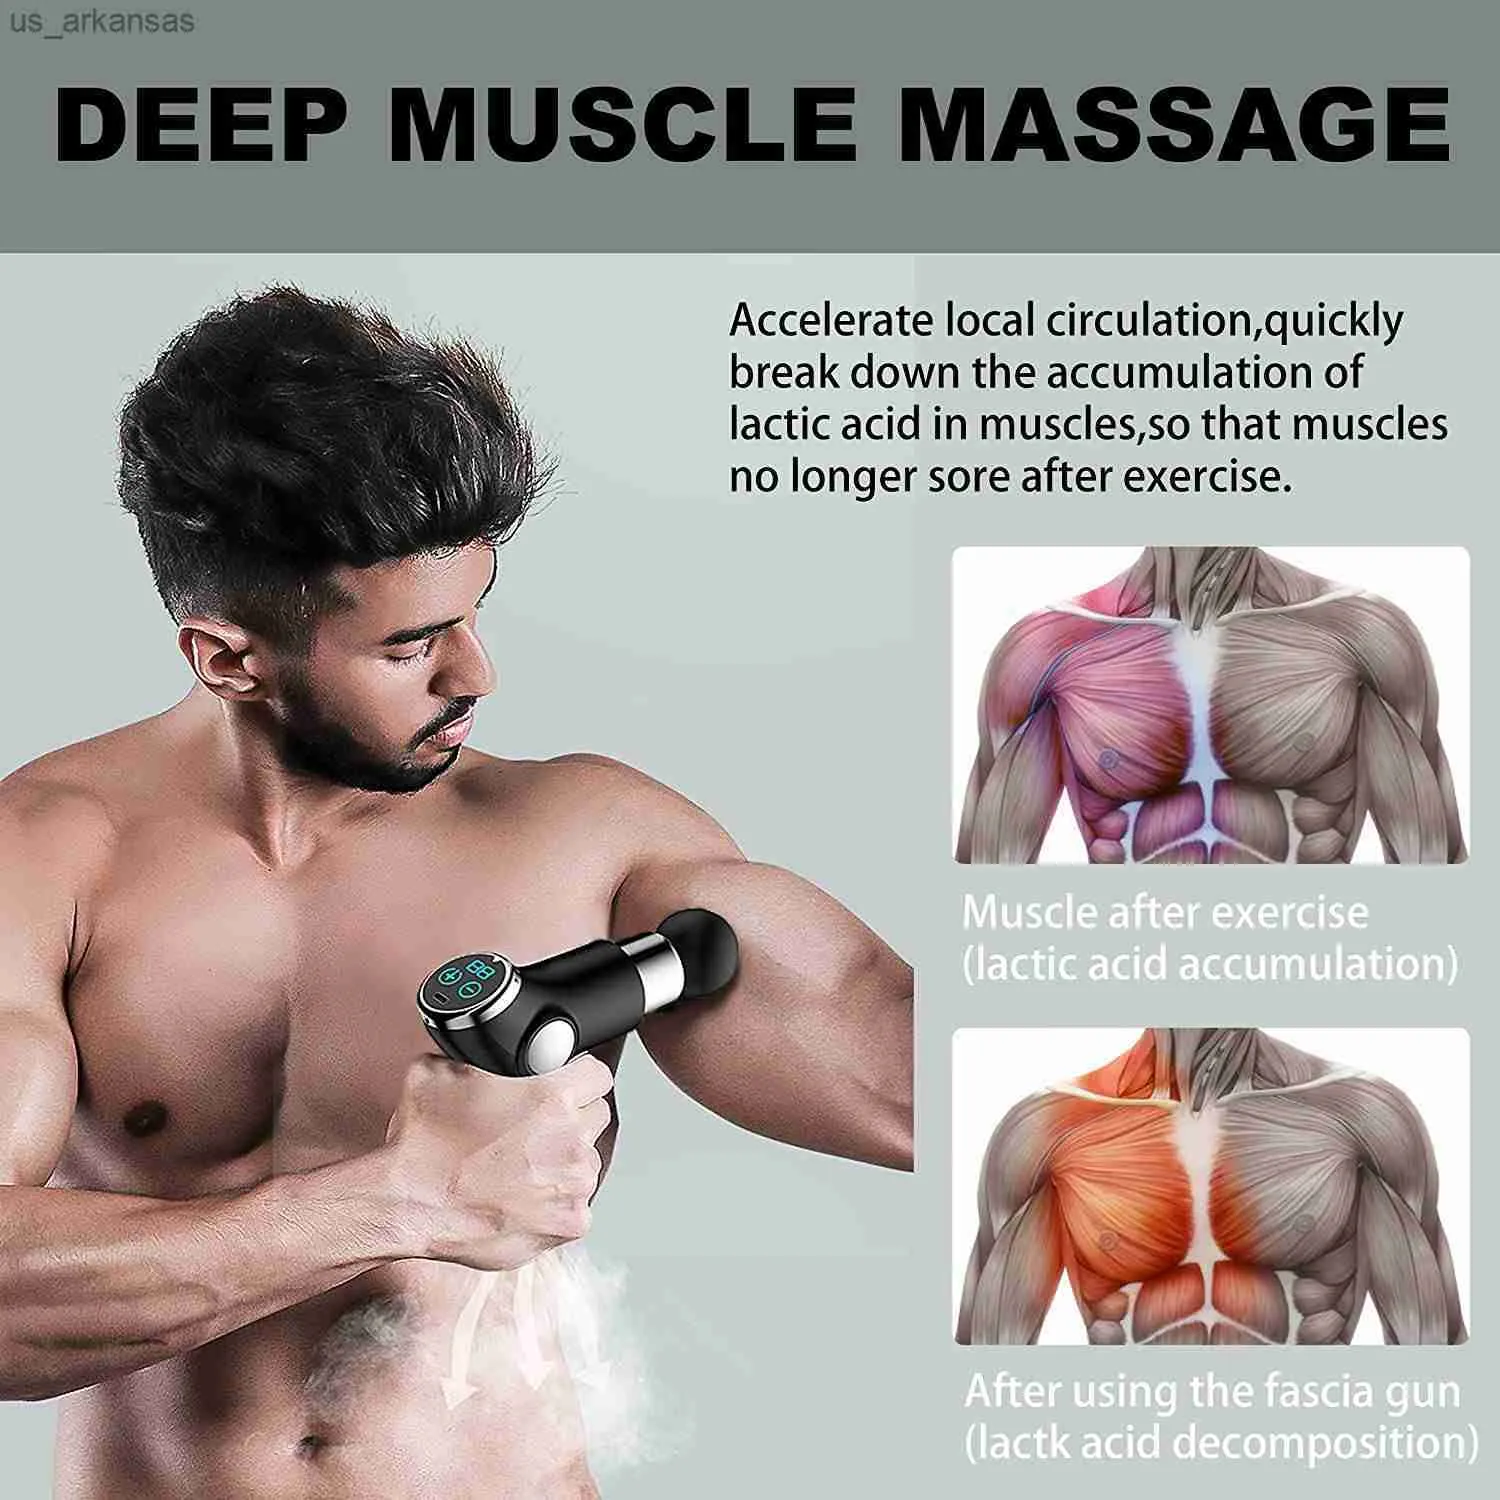 32 Speeds LCD Mini Fascial Gun Vibration Massage Machine Muscle